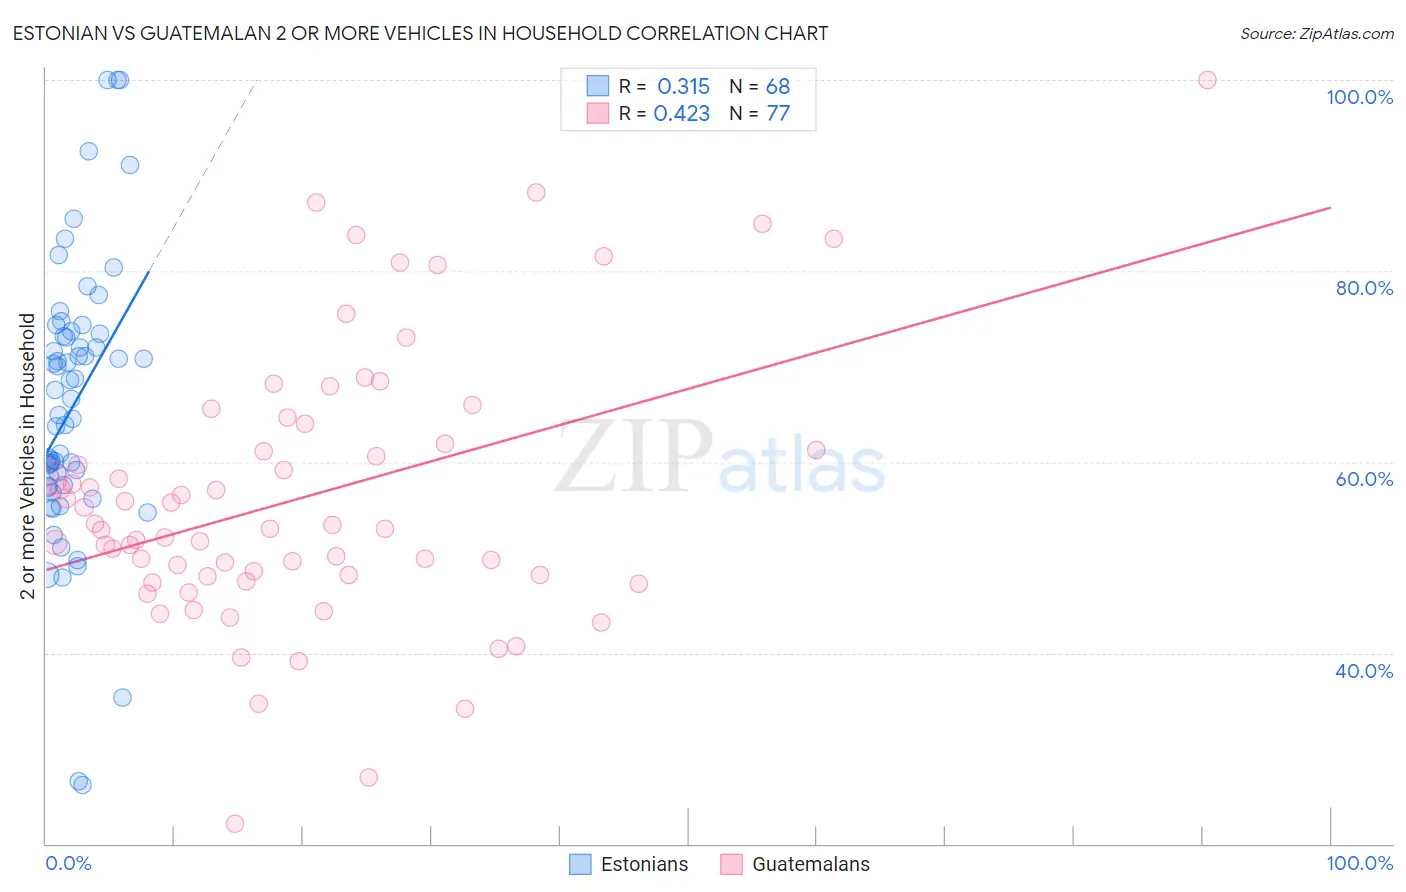 Estonian vs Guatemalan 2 or more Vehicles in Household